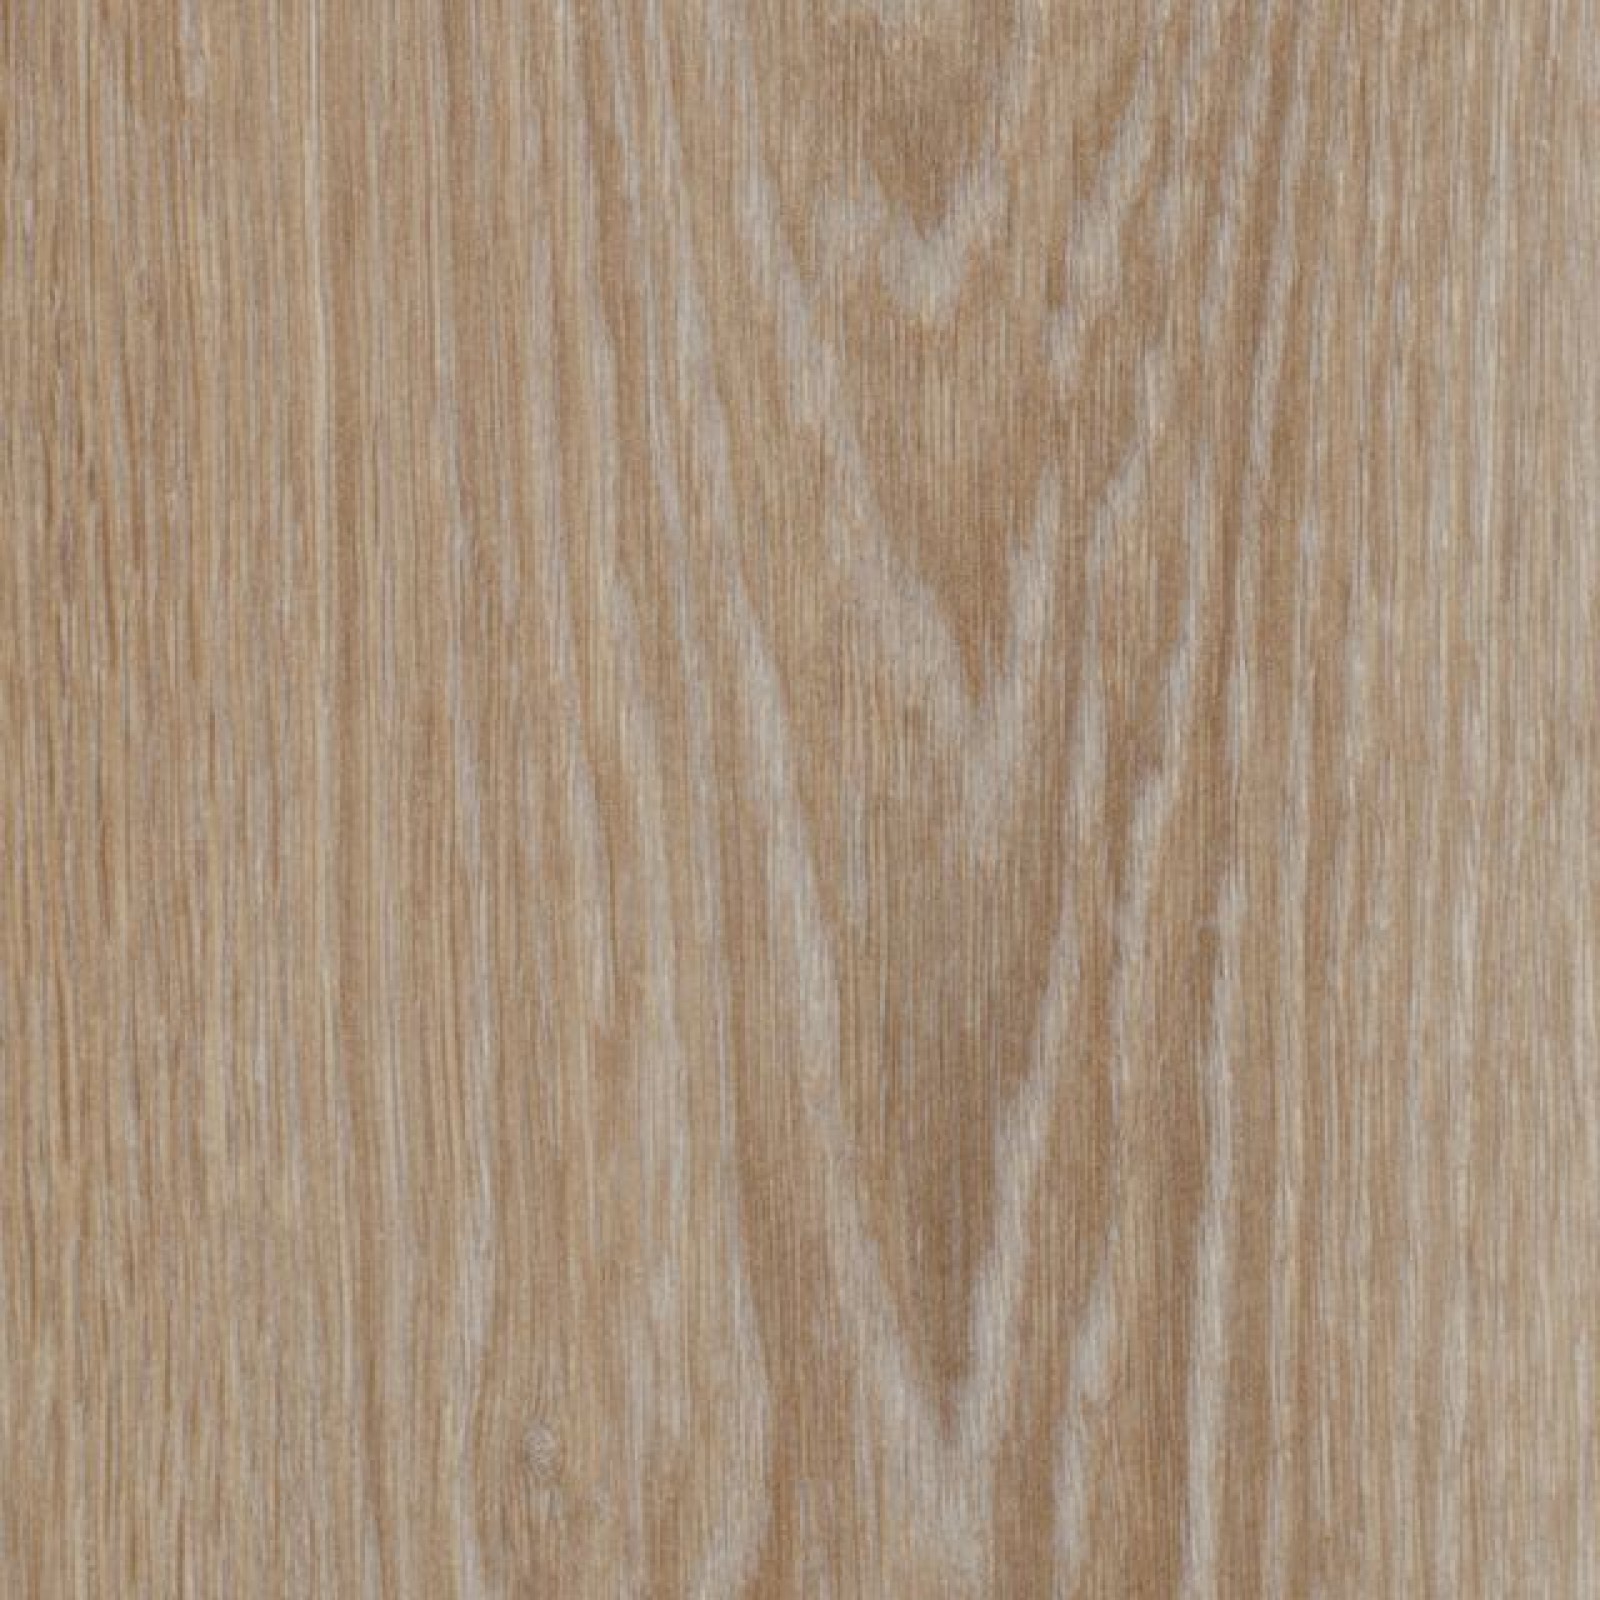 Vzor - 63412 blond timber (120x20cm)